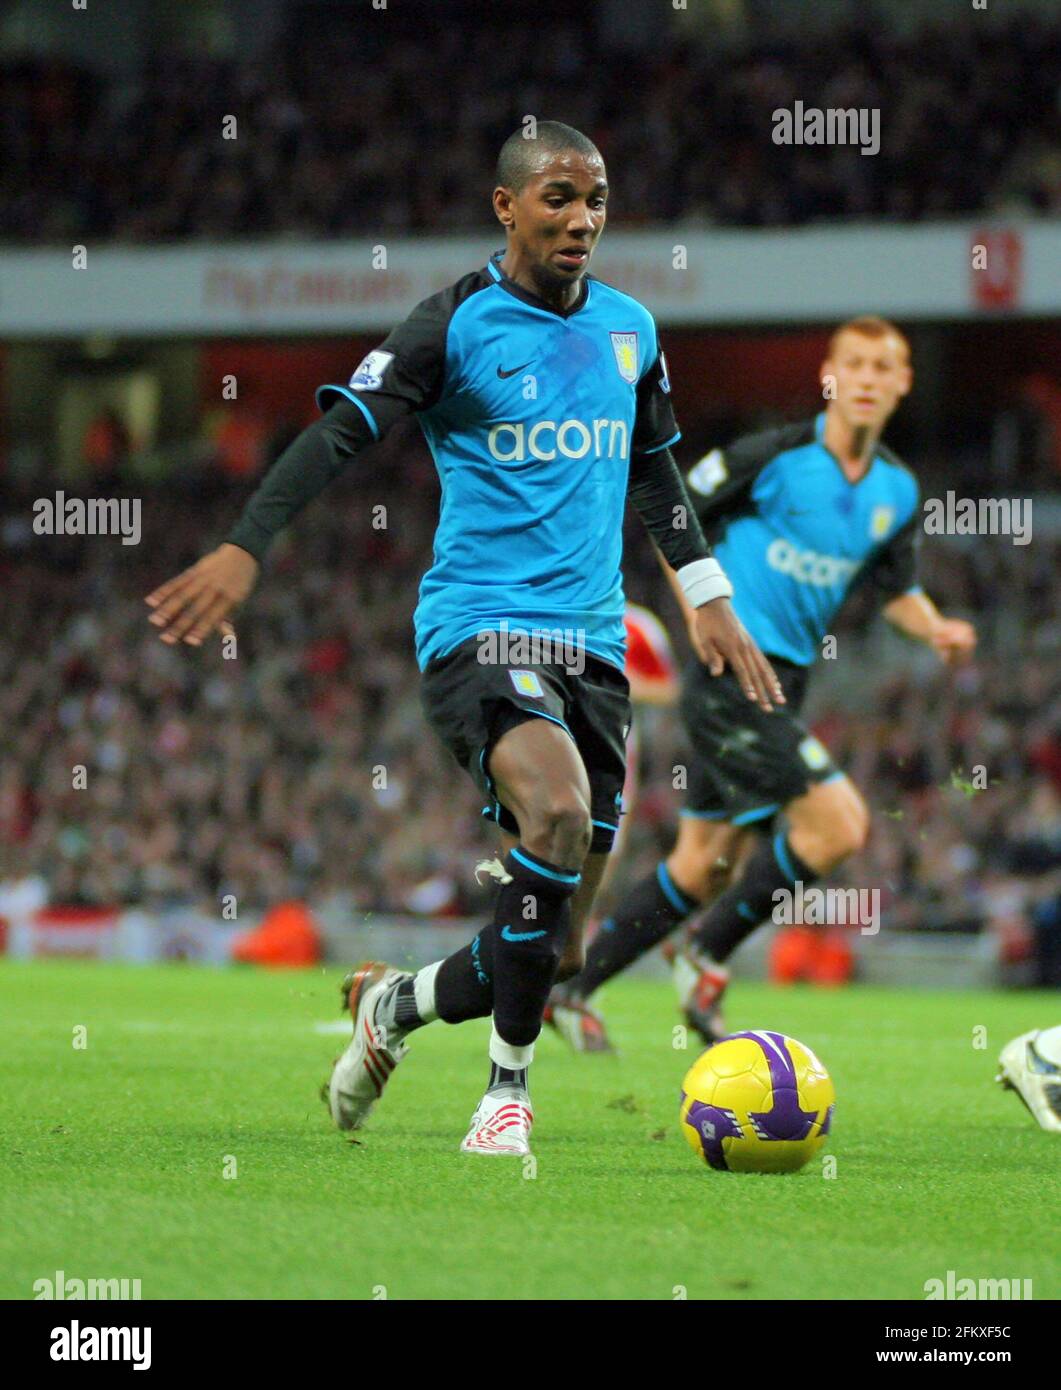 Arsenal / Aston Villa Ashley Young Picture von Gavin Rodgers/ Pixel 07917221968 Stockfoto